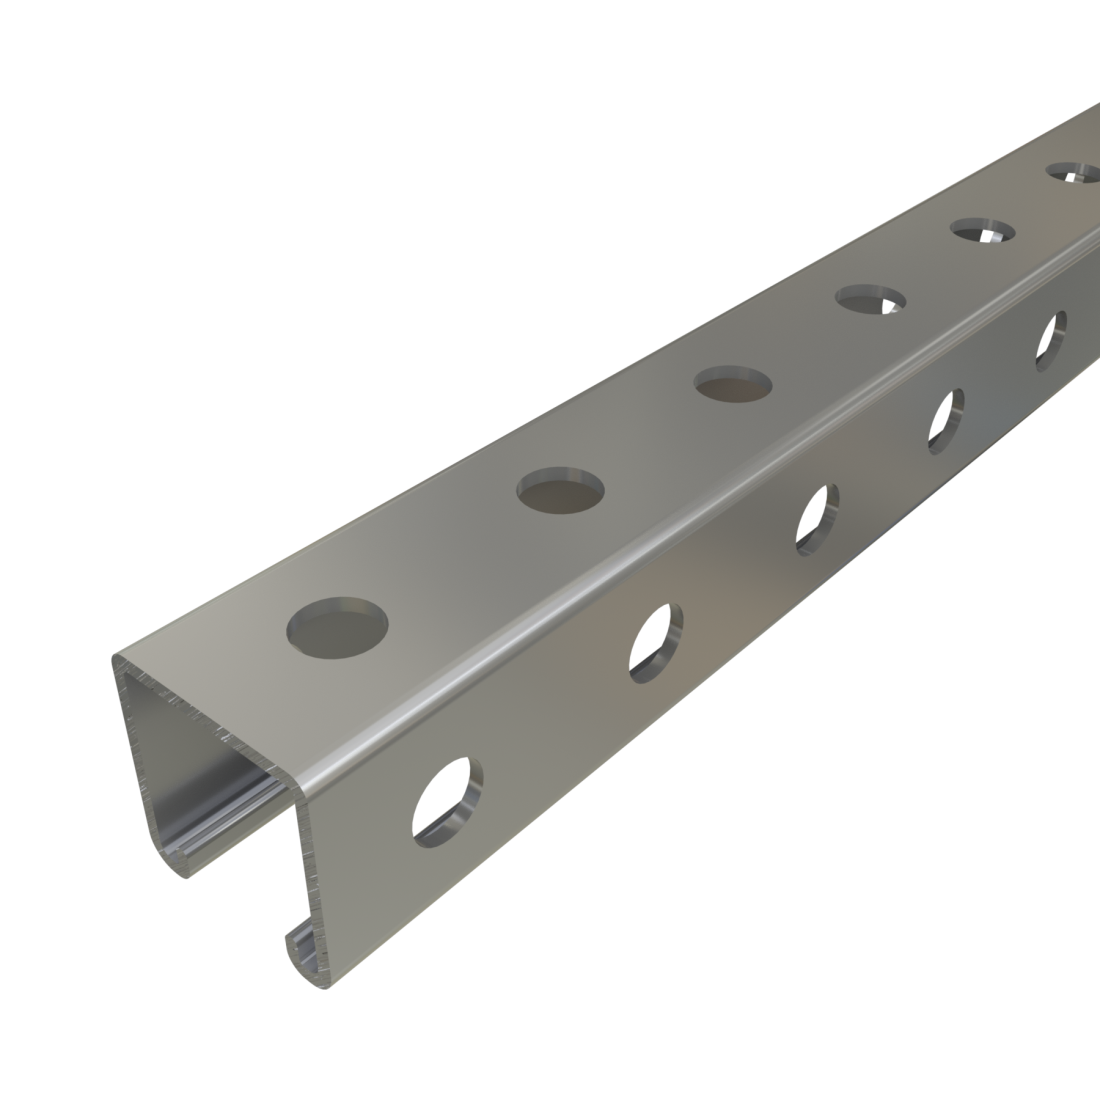 Unistrut P1000H3 - 1-5/8" x 1-5/8", 12 Gauge, Metal Framing Strut, Round Holes on all three sides